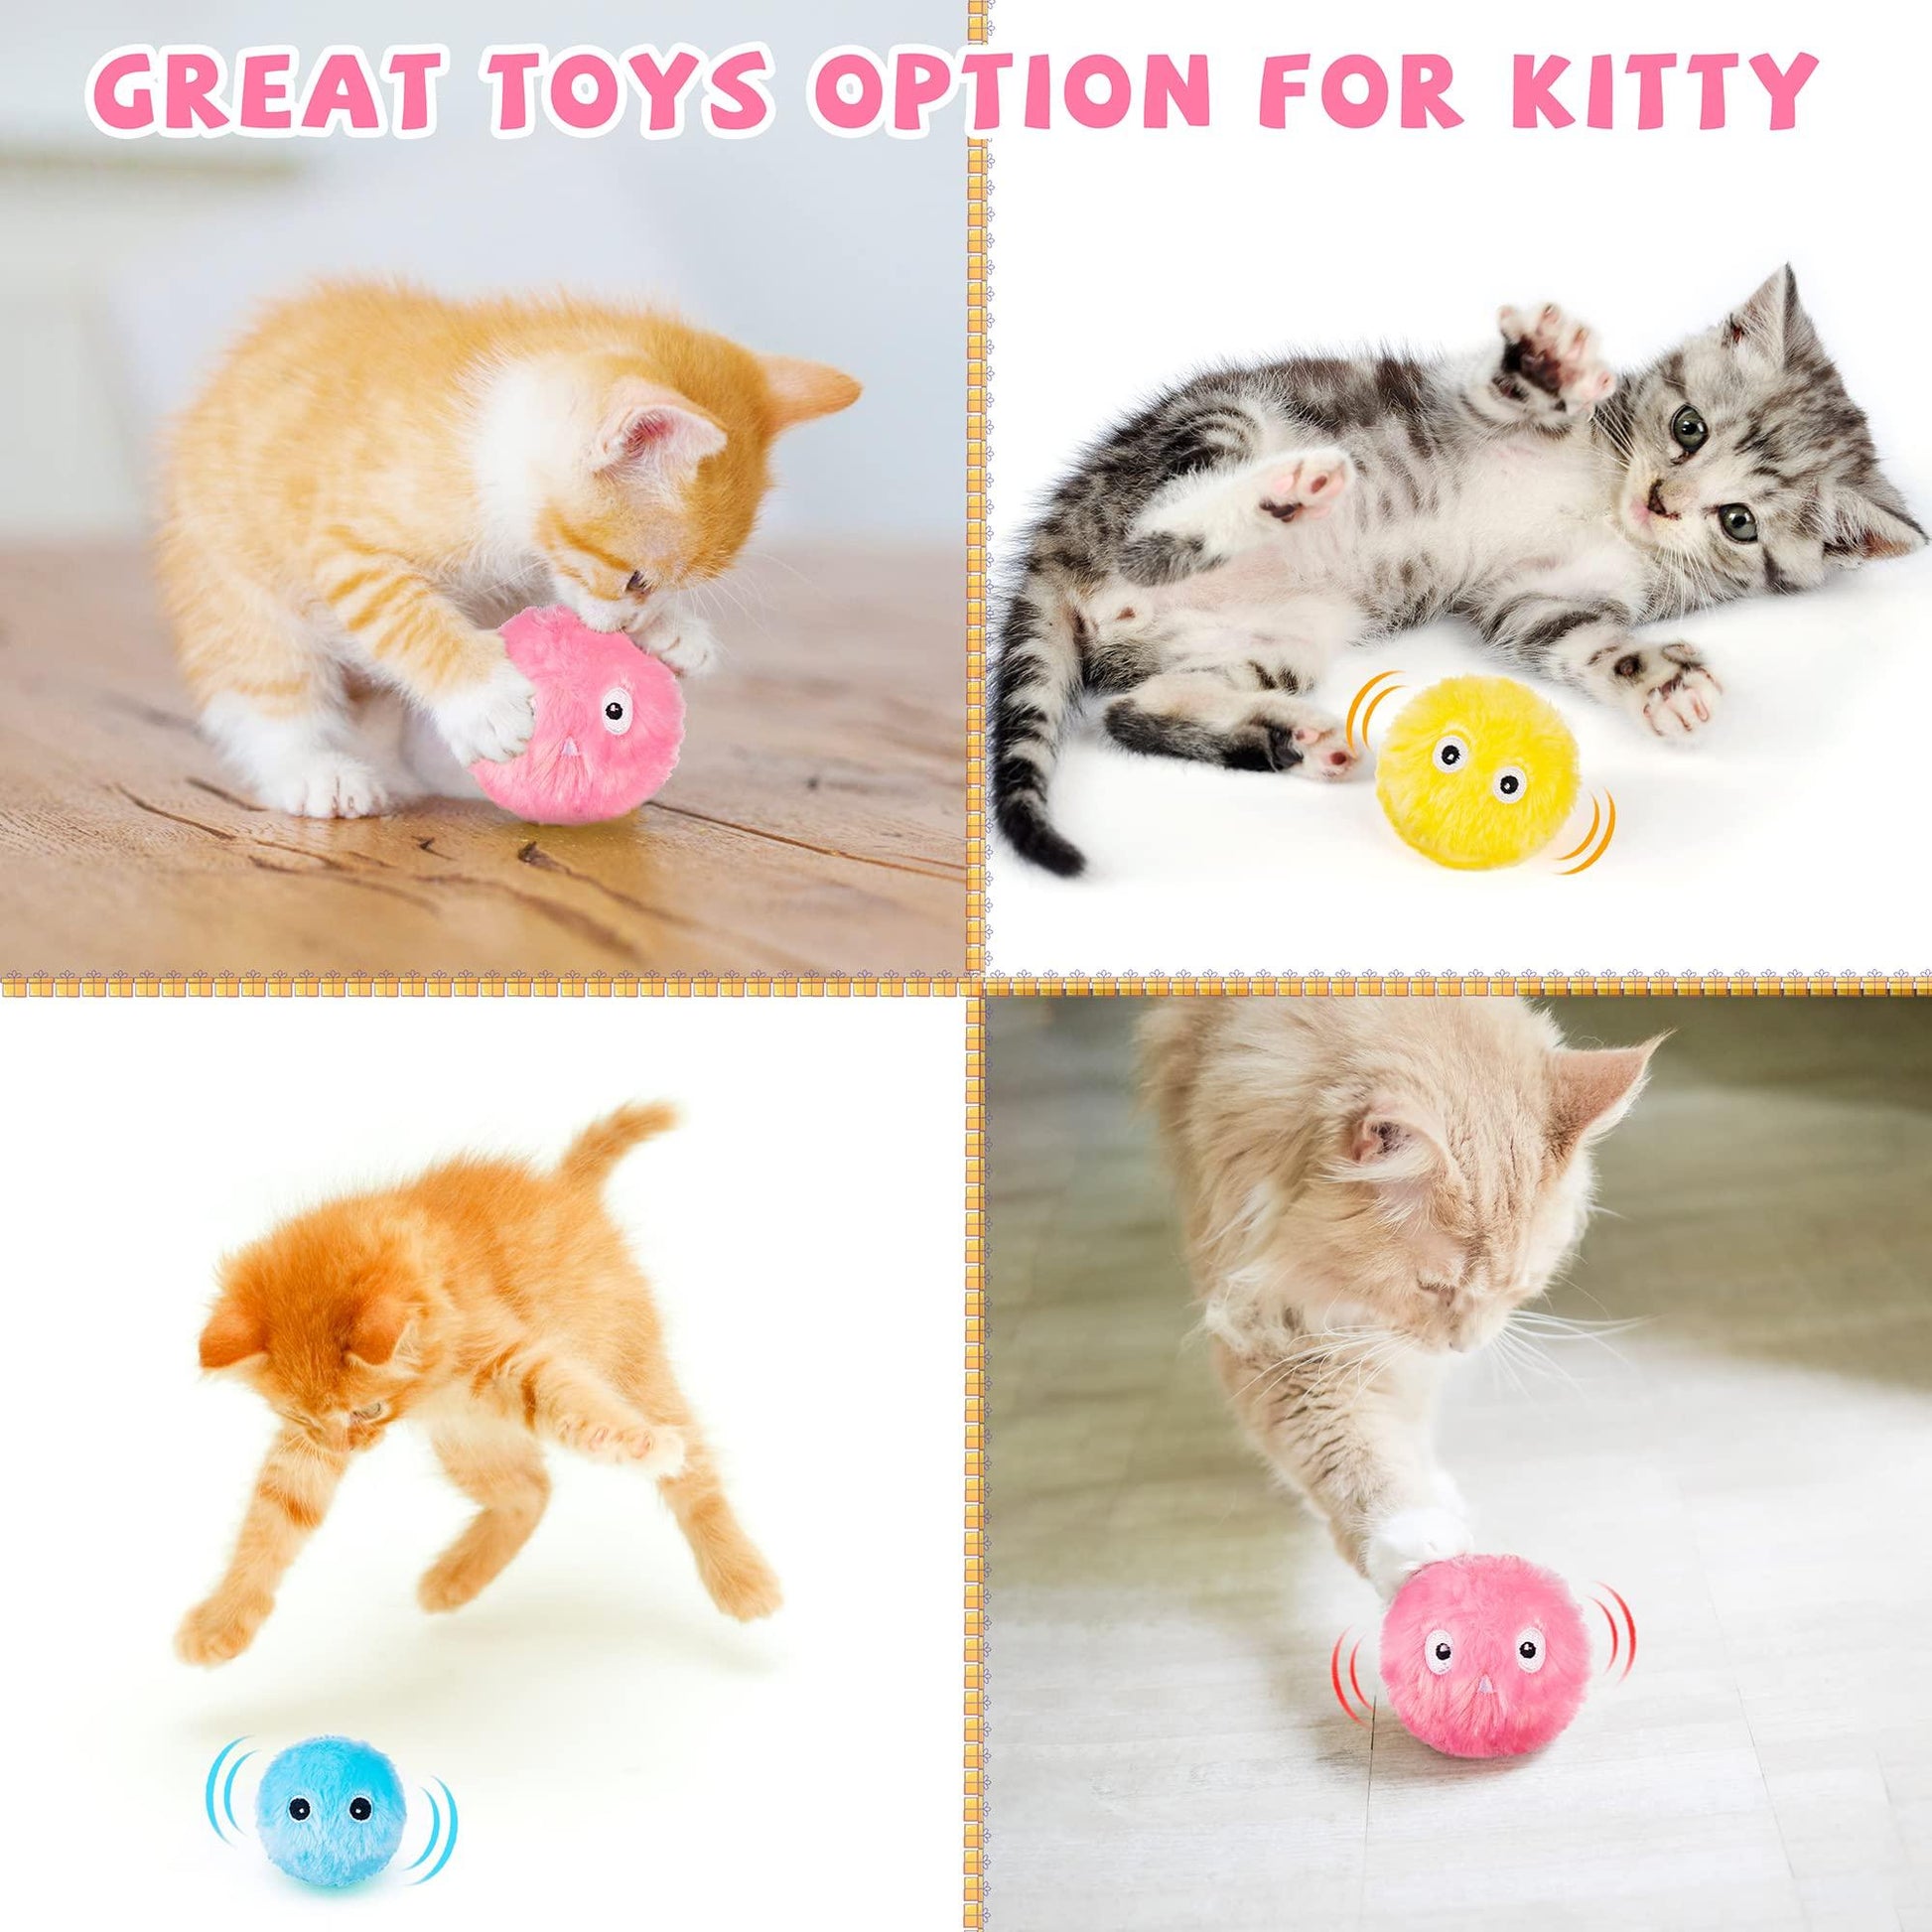 Smart Cat Toys Interactive Ball - dressowy